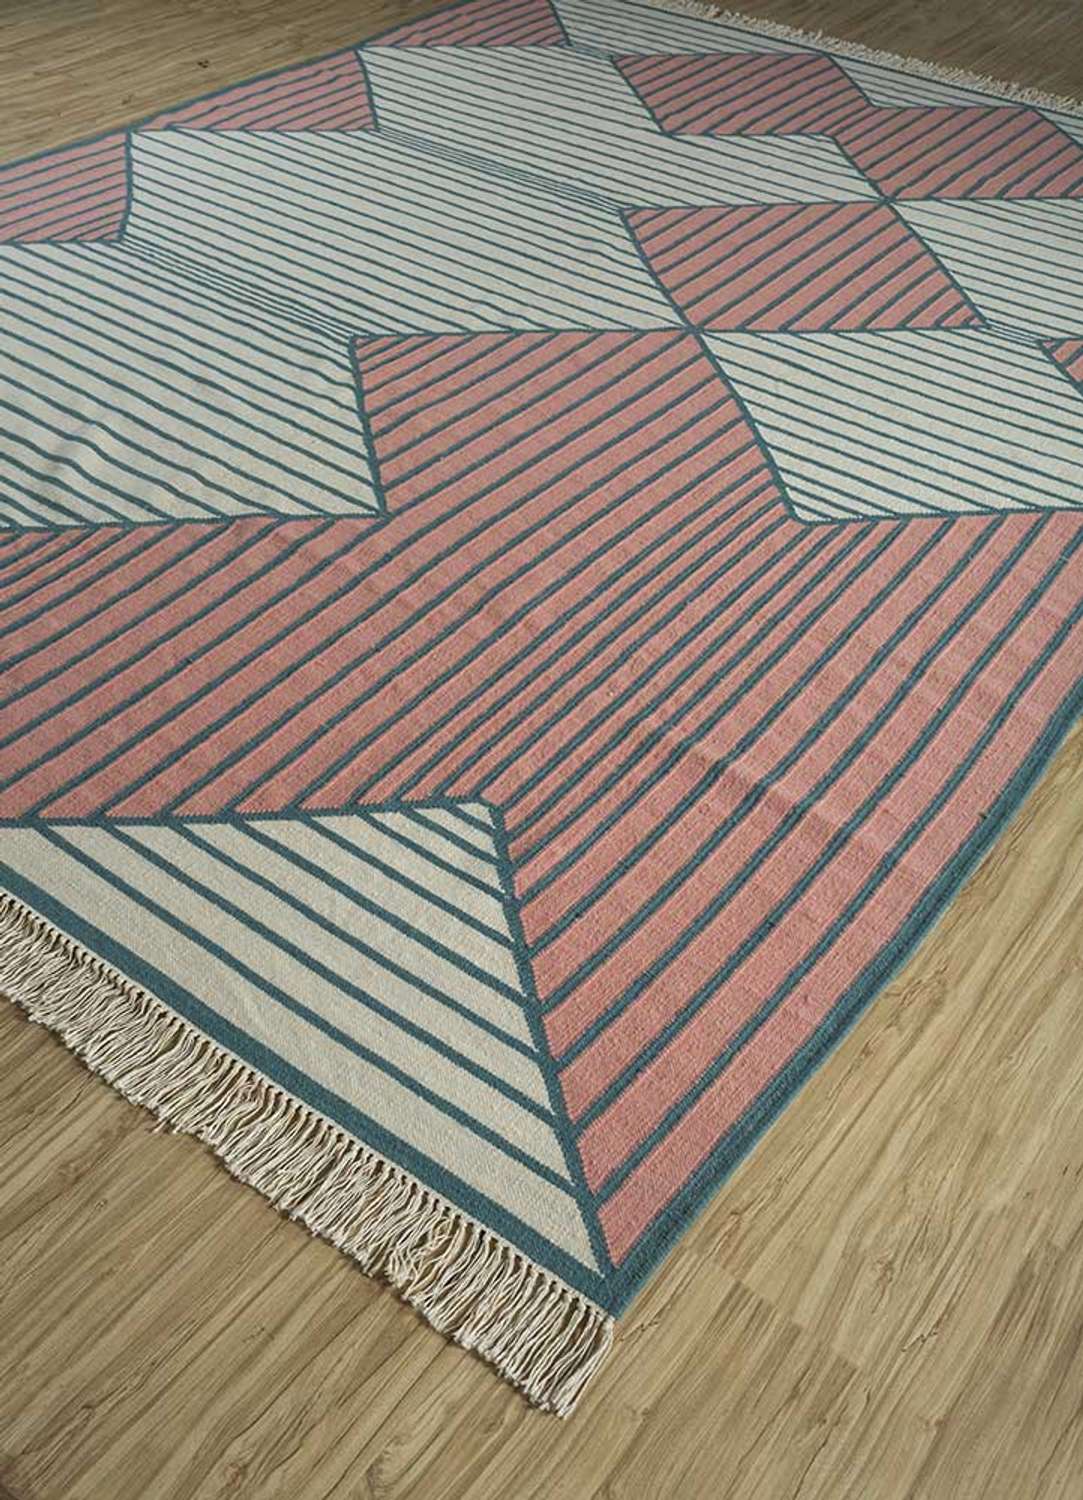 Designer Teppich - 300 x 240 cm - mehrfarbig